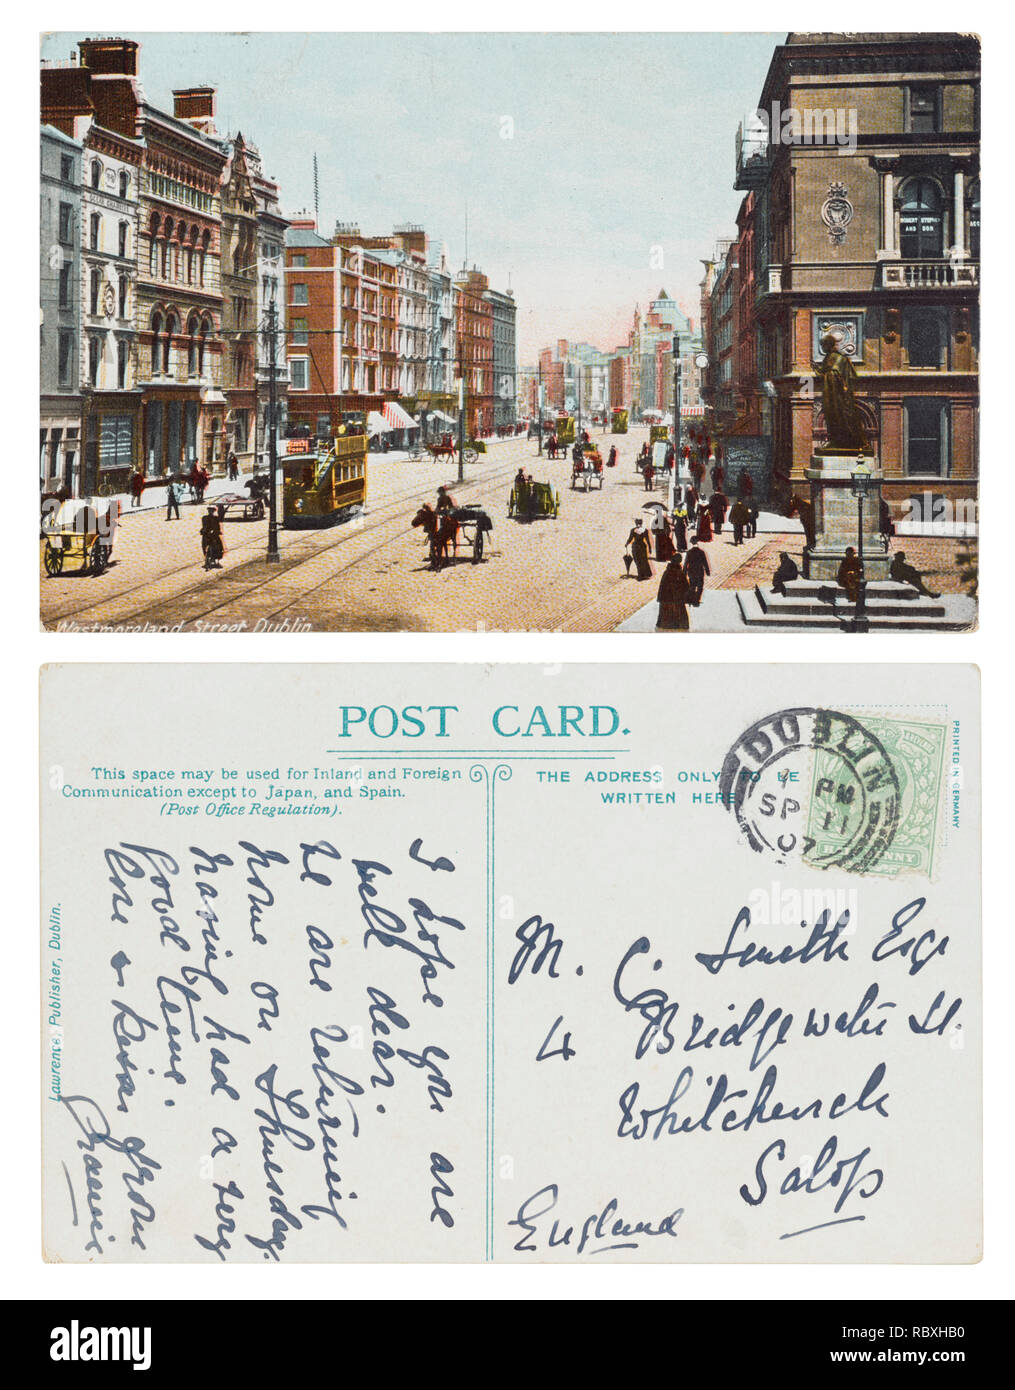 Tarjeta postal de Westmoreland Street, Dublin al Sr. C Smith Esq, 4 Bridgewater Street, Whitchurch, Salop, en septiembre de 1907 Foto de stock